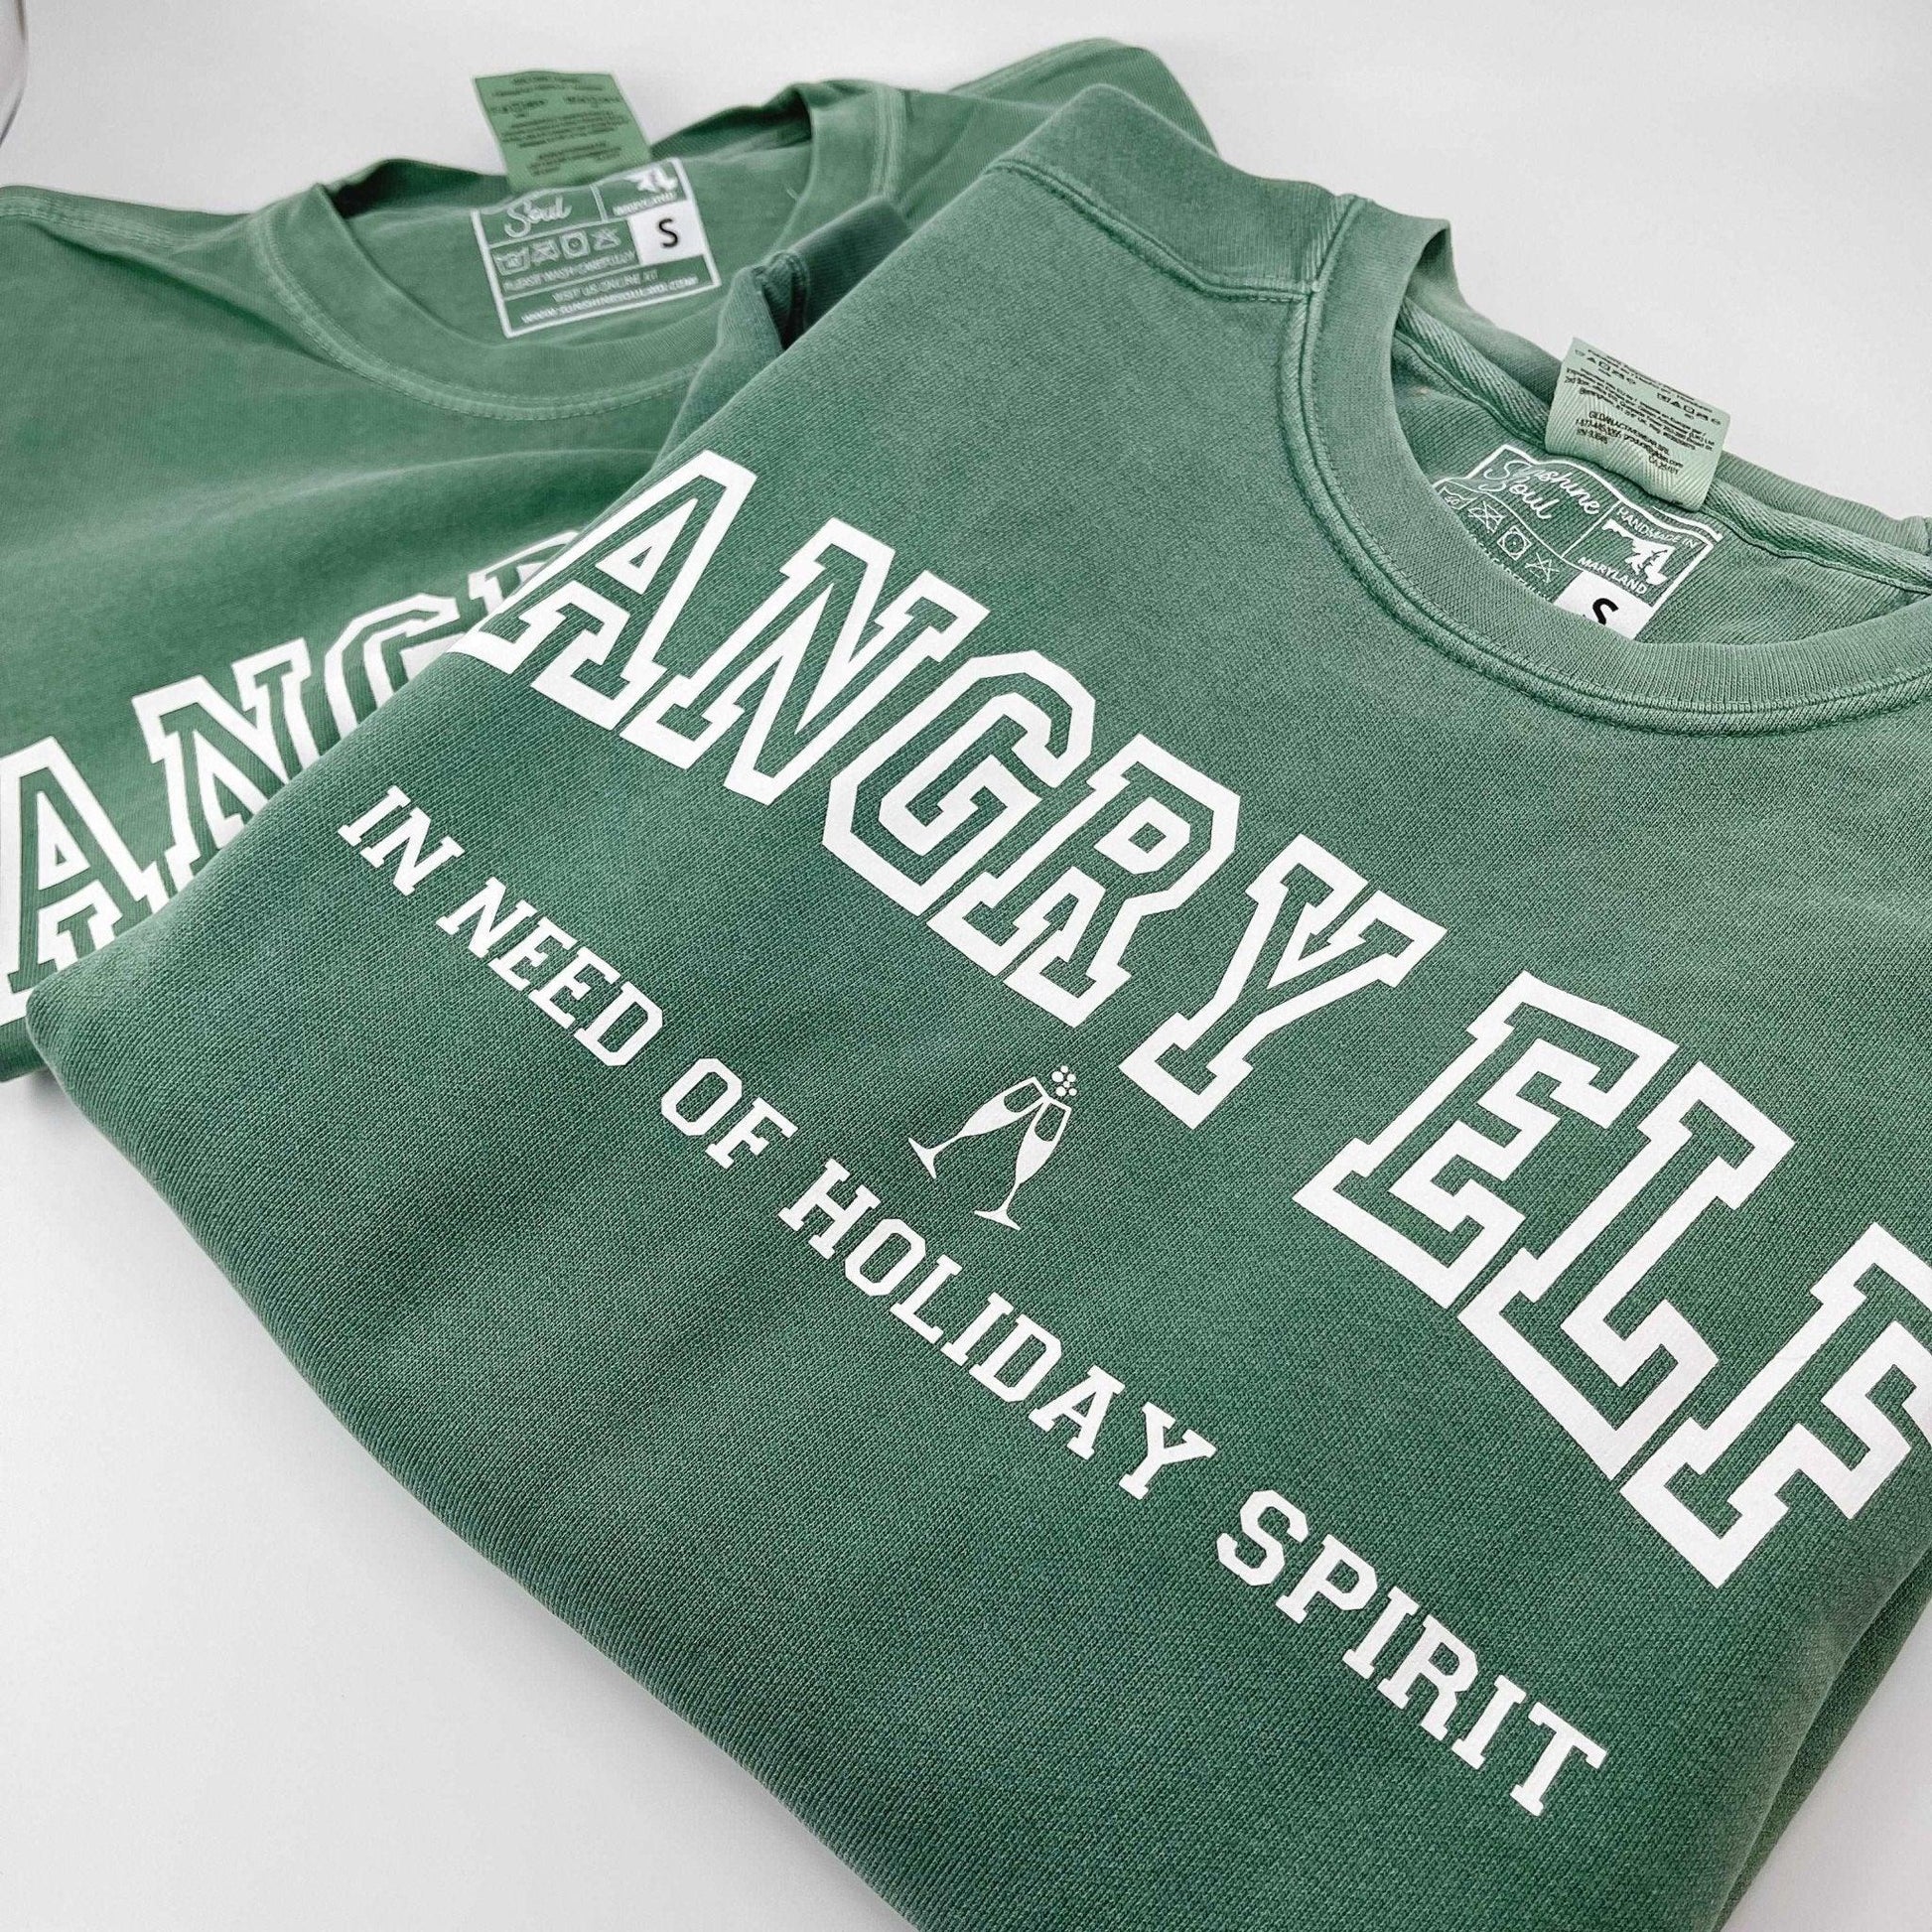 Angry Elf Long Sleeve T-Shirt - Sunshine Soul MD